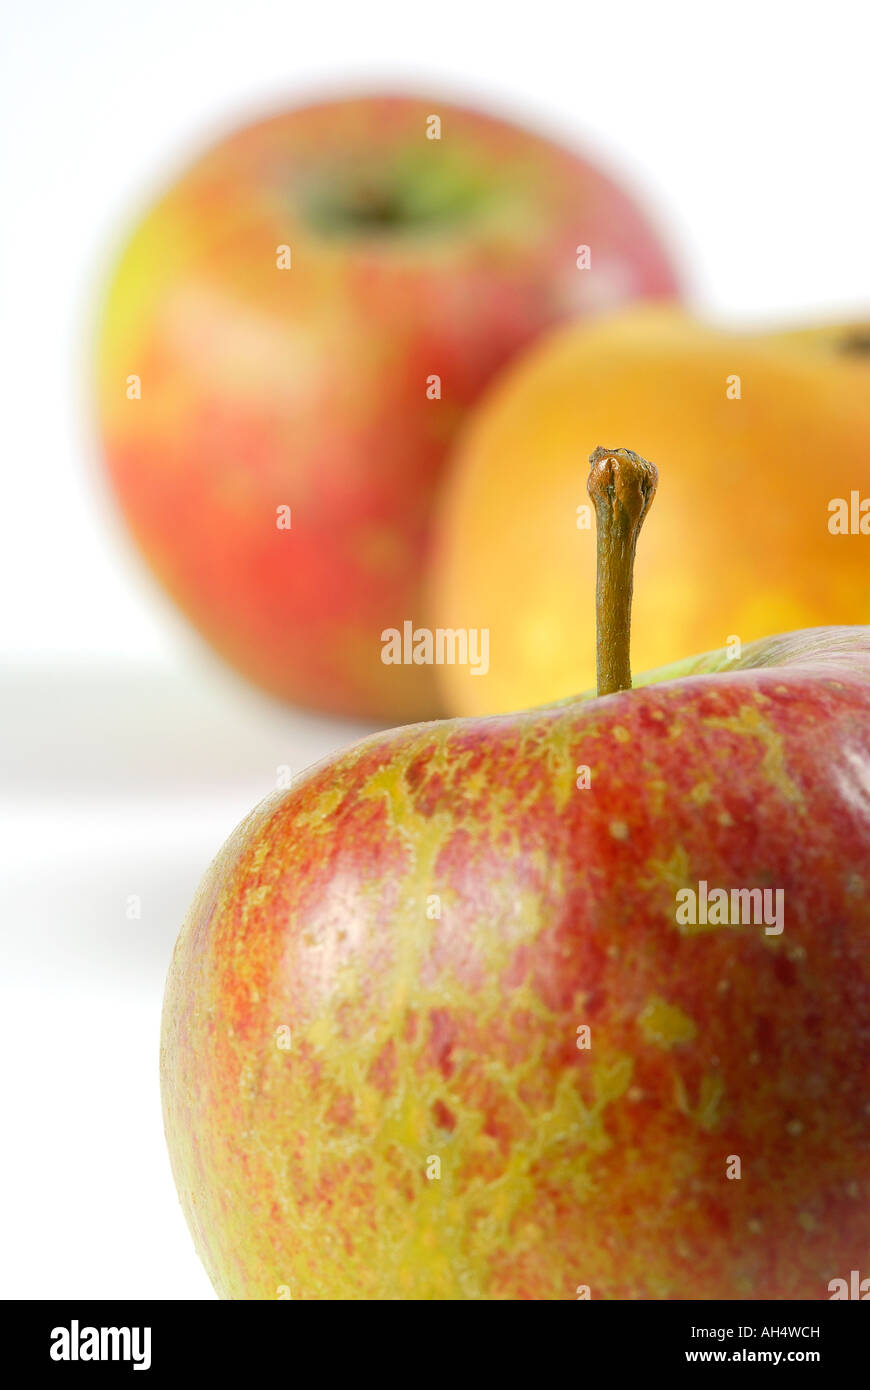 selection of english apples Stock Photo